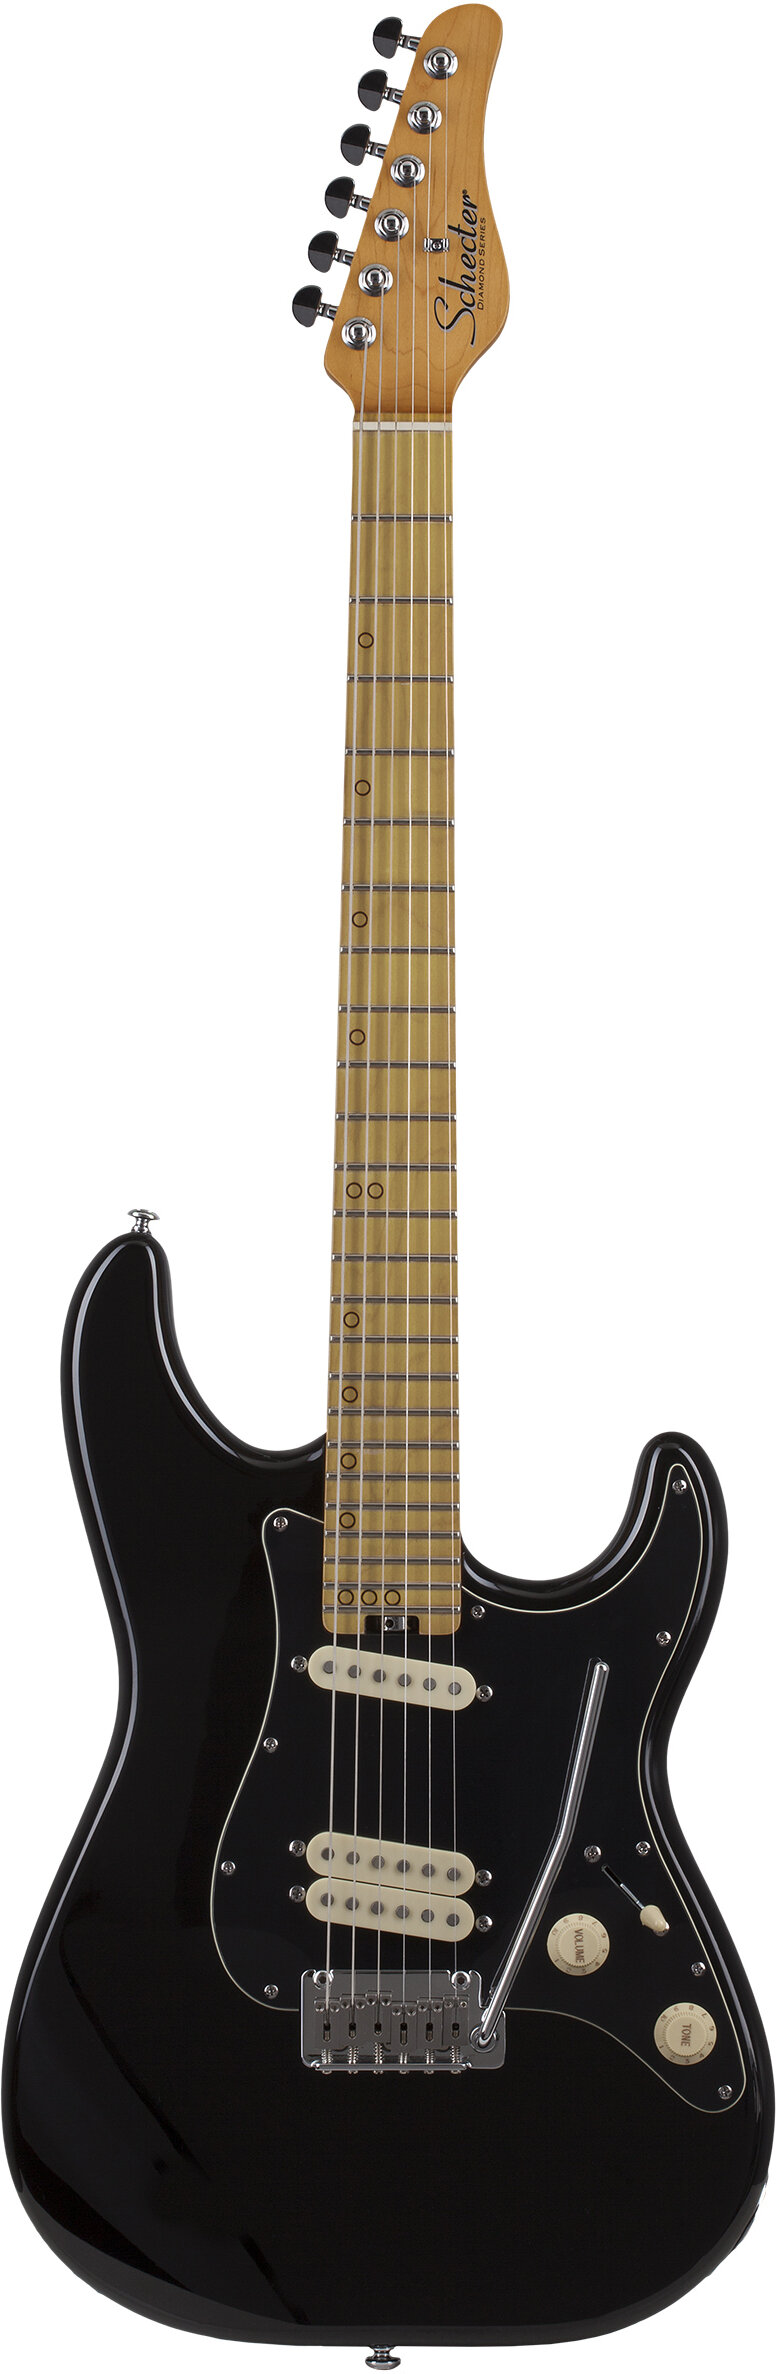 Schecter MV-6 Electric Guitar Gloss Black -  4201